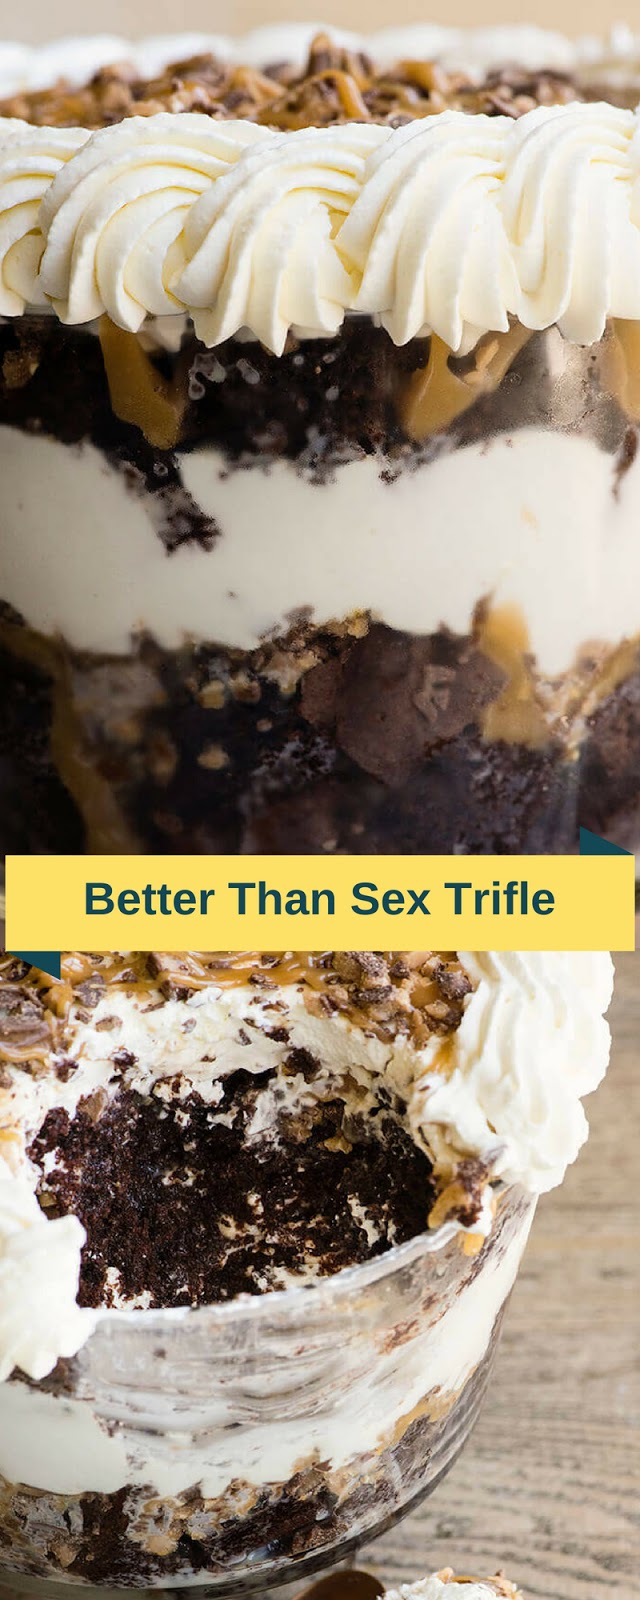 Better Than Sex Trifle | Mariana Kitchen